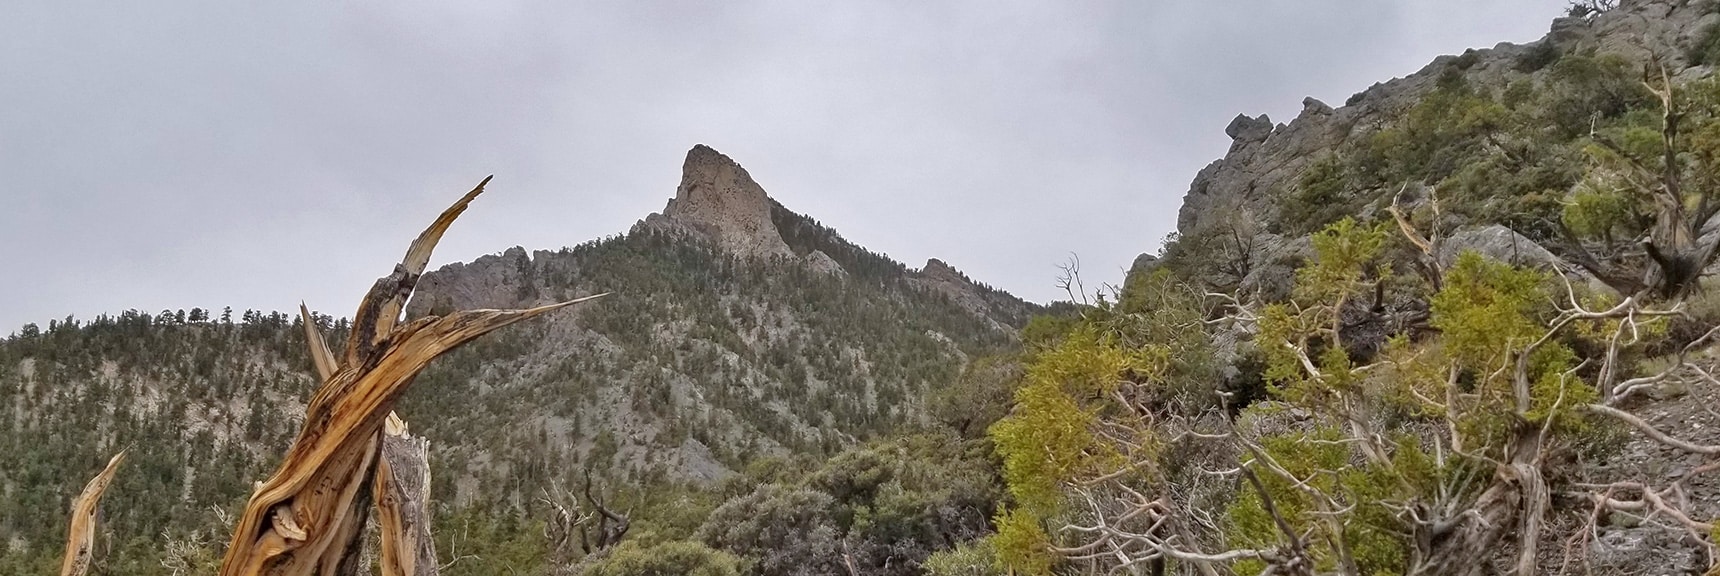 Ascending 9,235ft High Point Ridge on Trail Just Beyond McFarland Peak | Sawmill Trail to McFarland Peak | Spring Mountains, Nevada